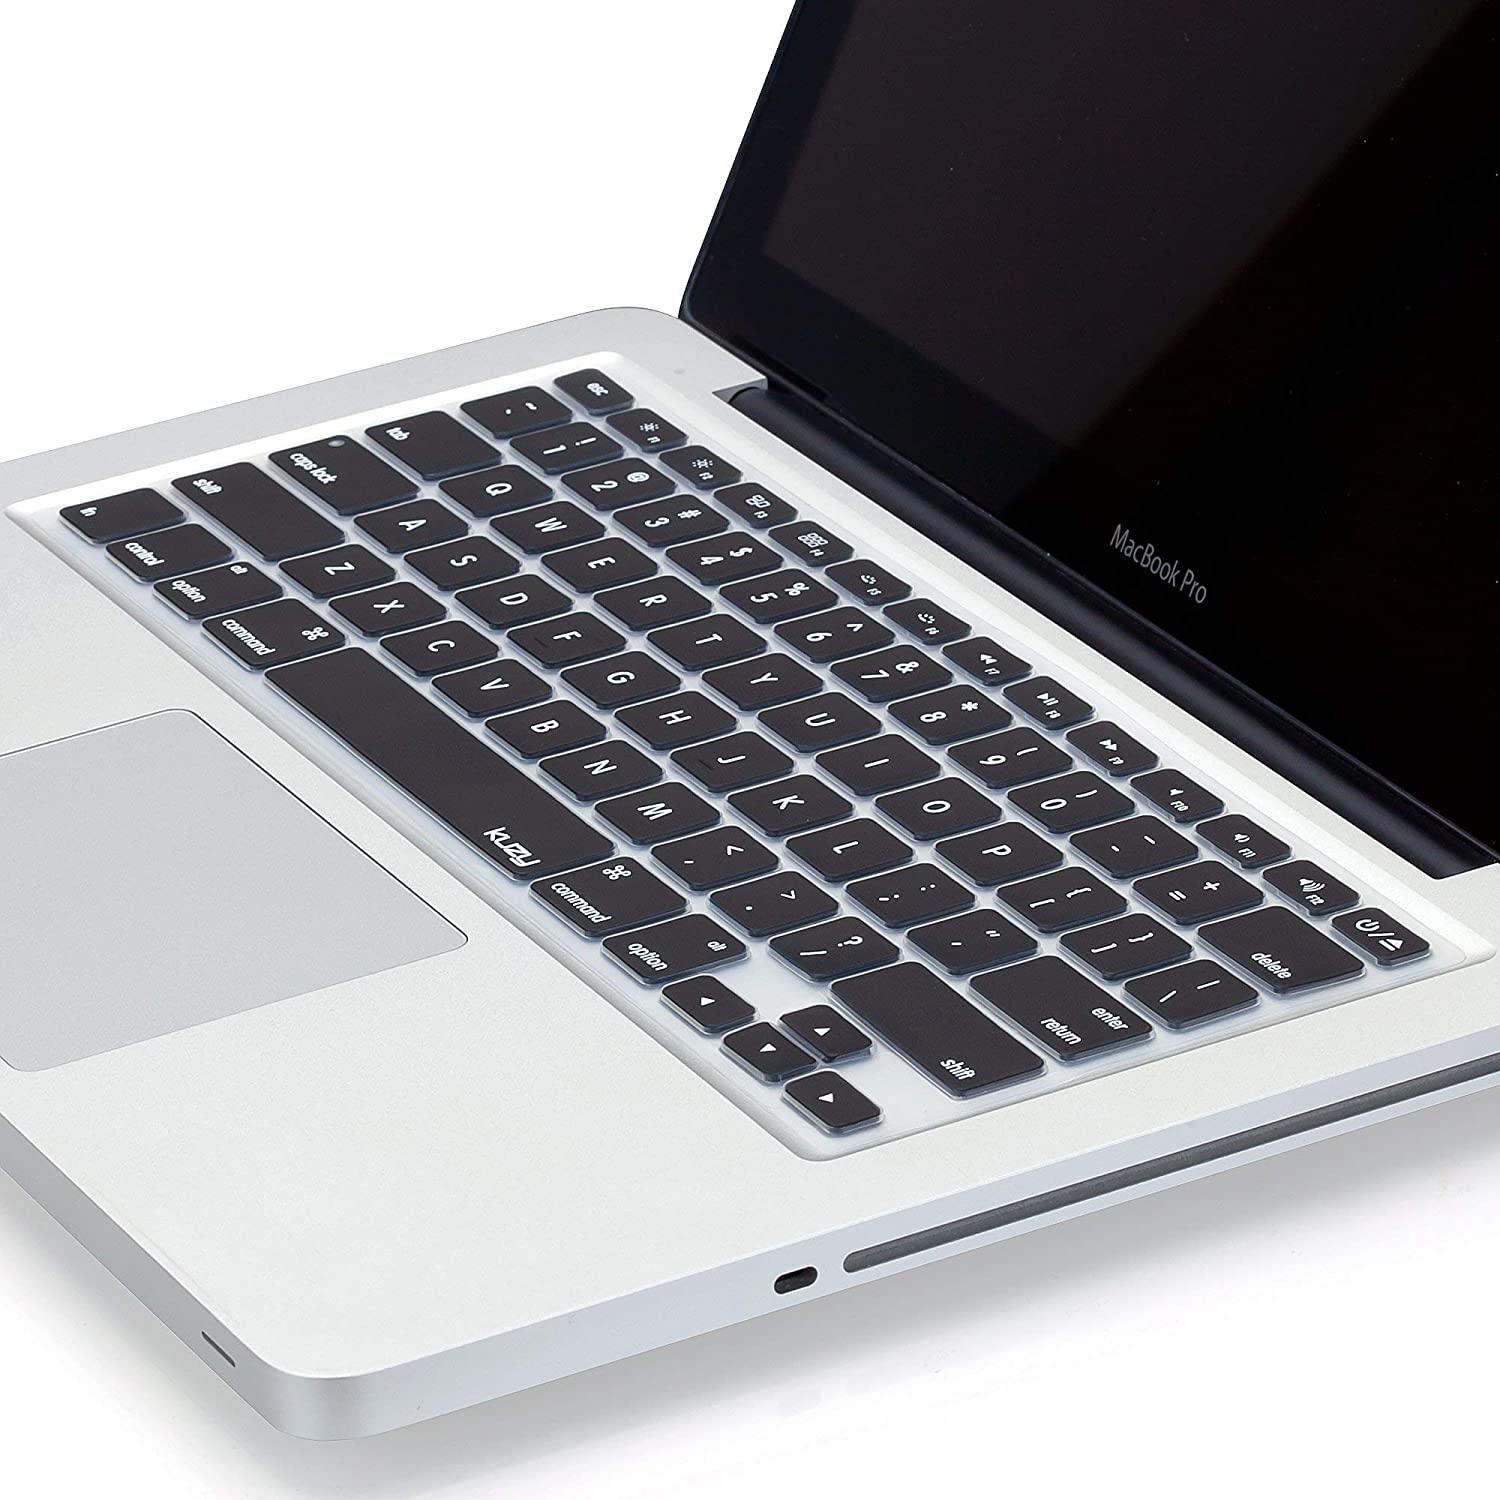 Dealsplant Laptop Keyboard Skin protector for MacBook Pro 15 inch with Retina Display Model: A1398 (MGXA2LL/A, MGXC2LL/A, MC975LL/A, MC976LL/A)-Keyboard Protectors-dealsplant